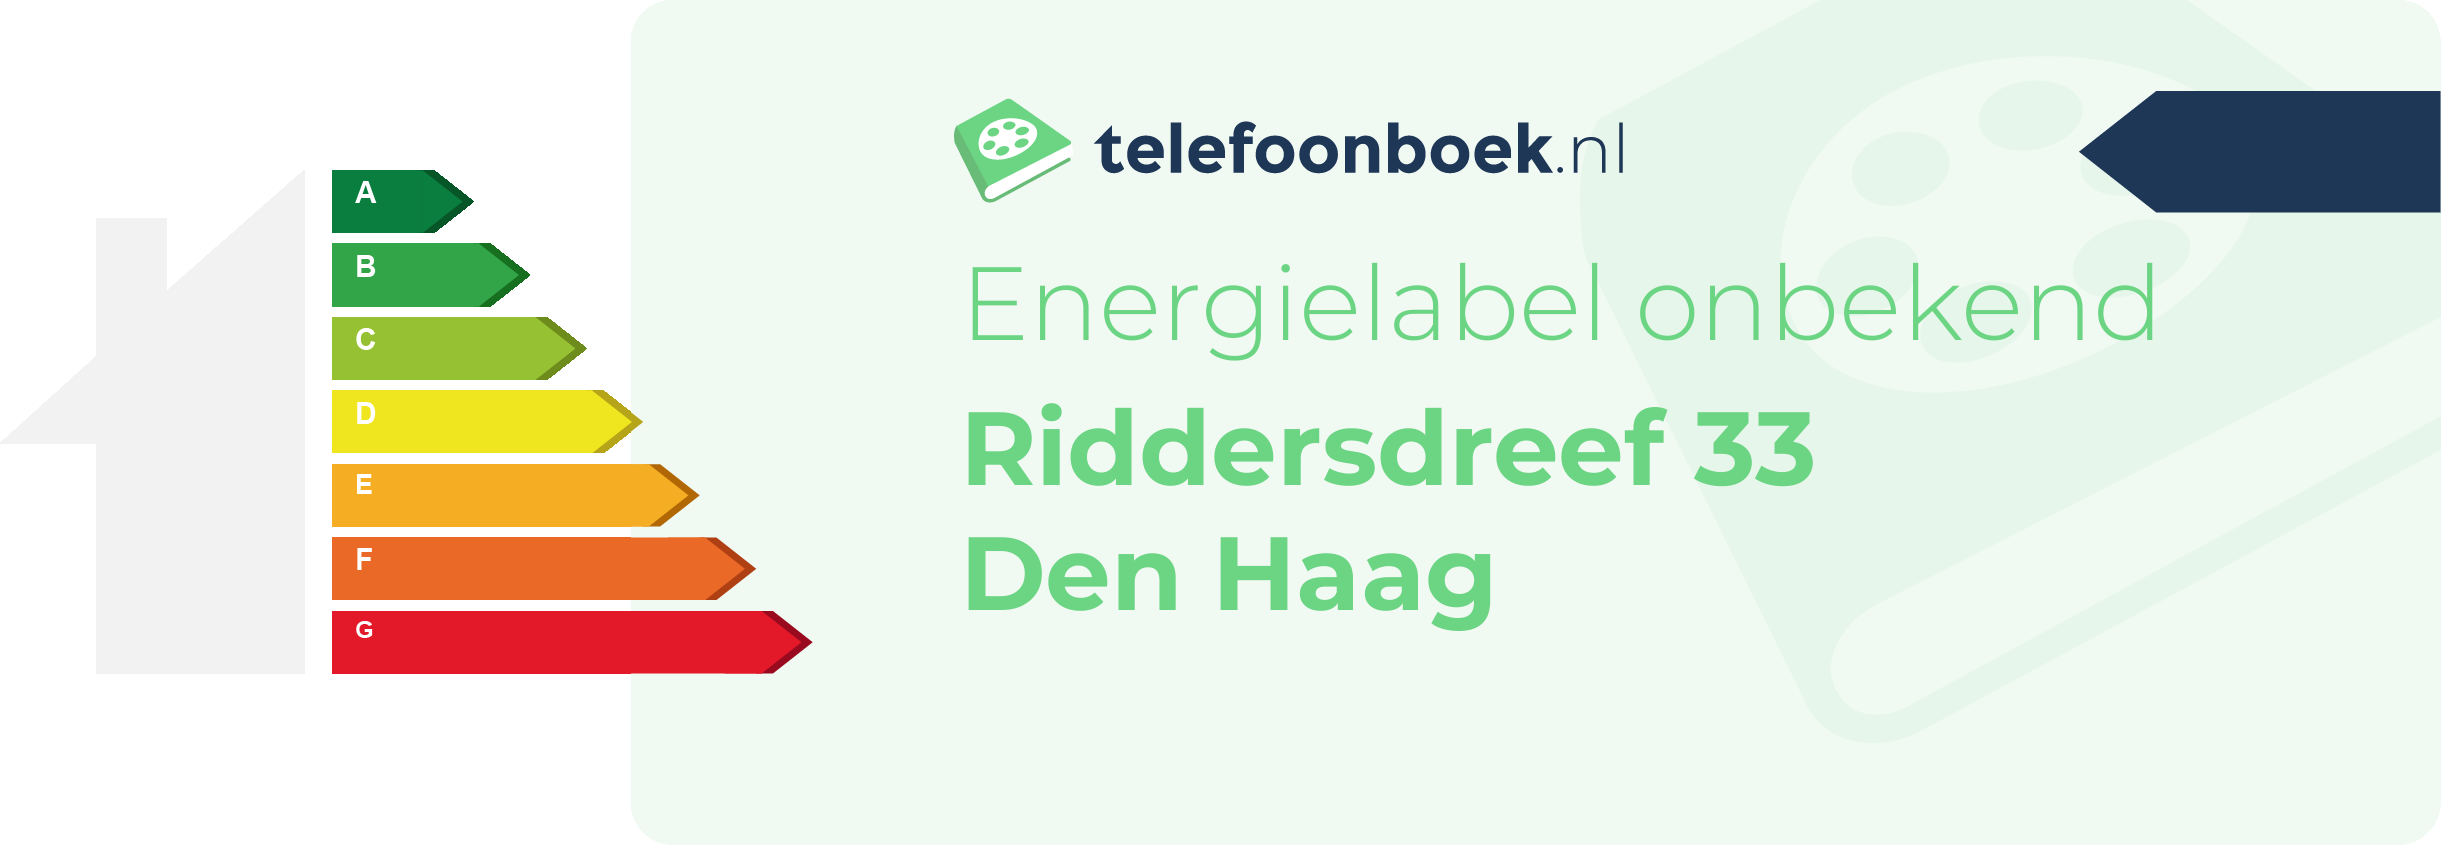 Energielabel Riddersdreef 33 Den Haag